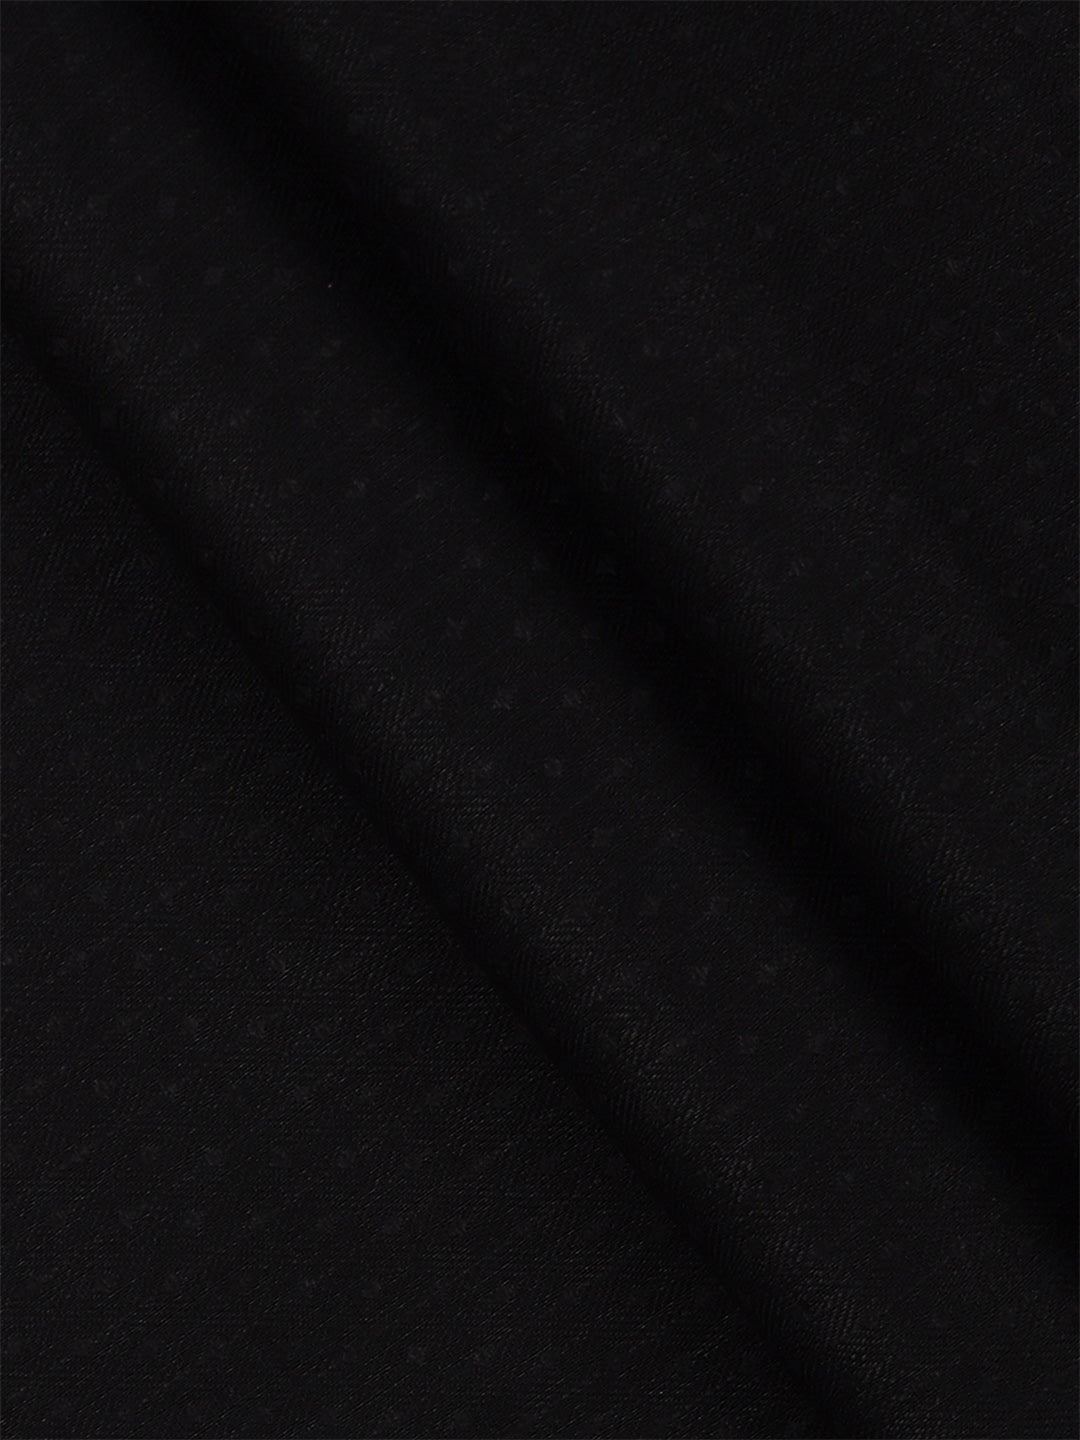 Cotton Blended Black Stripe Shirt Fabric High Style